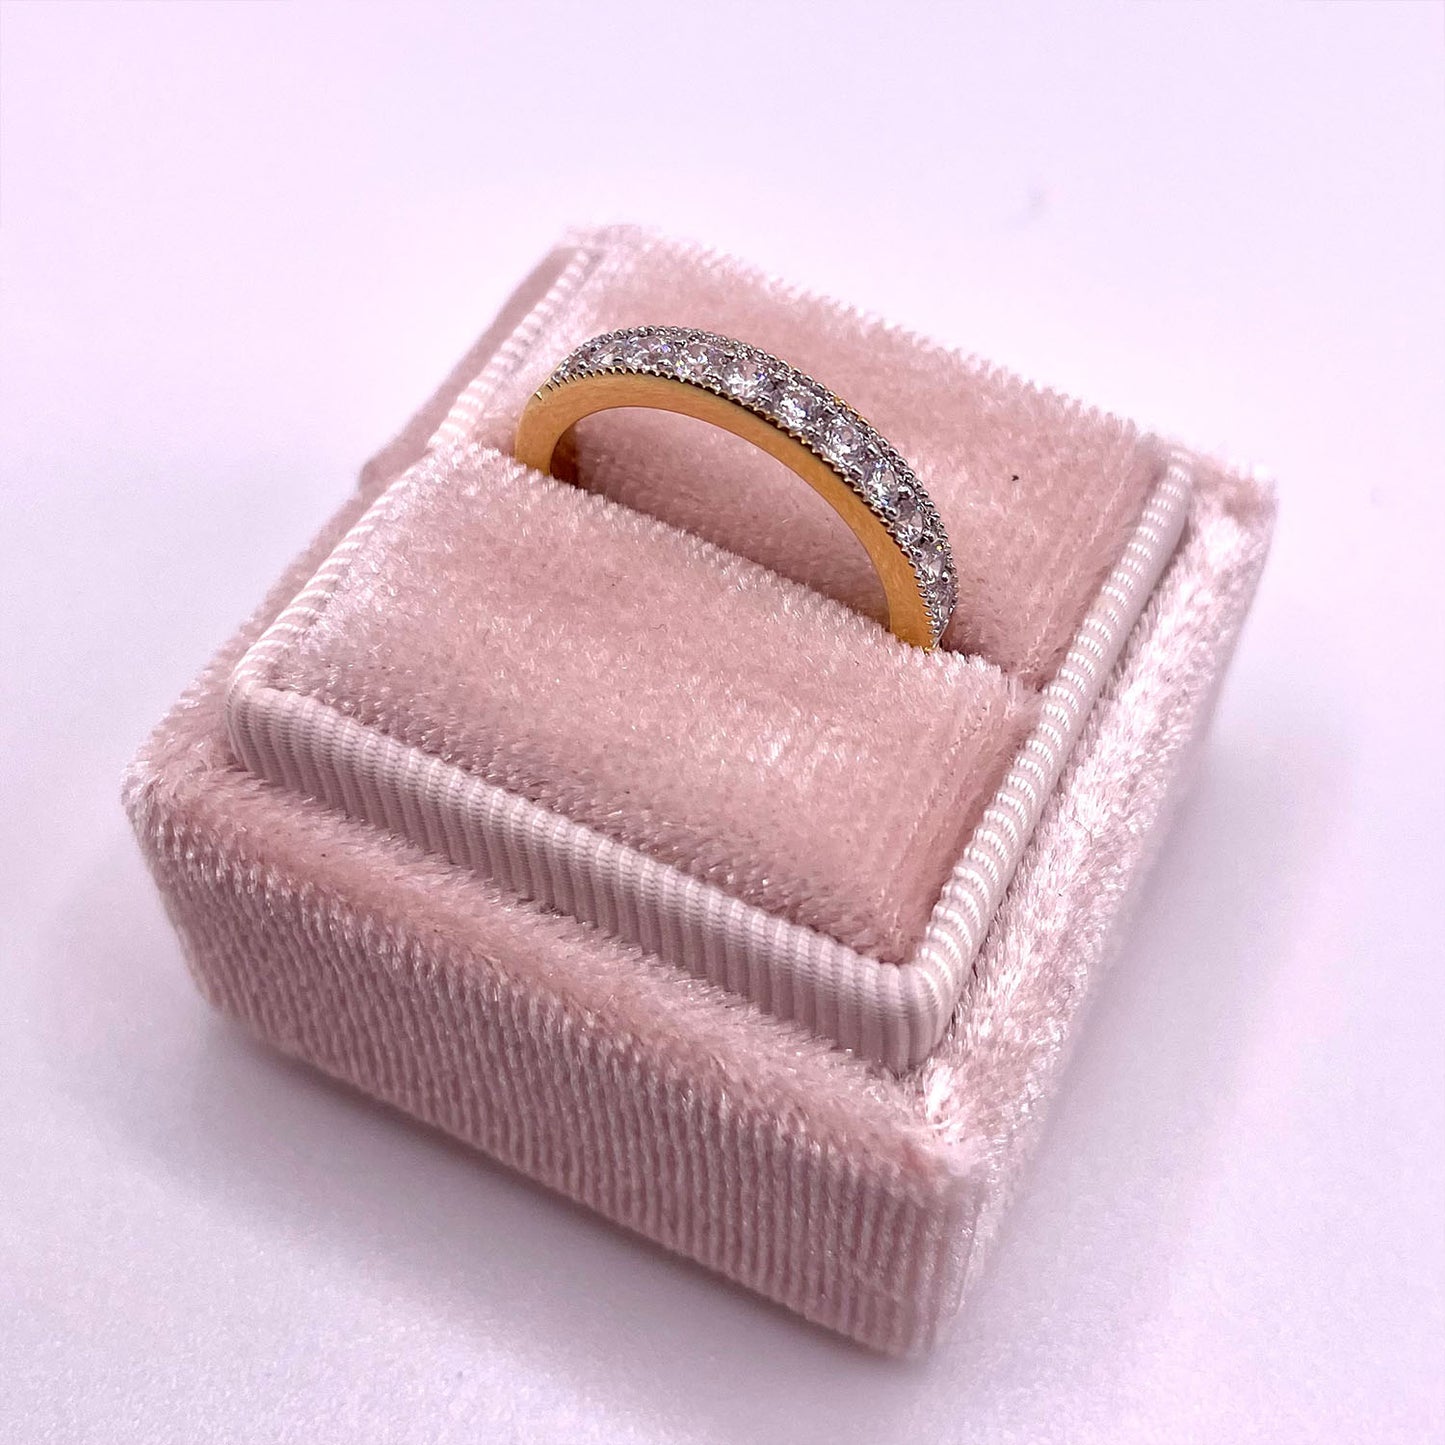 Lucy Round CZ Diamond Stacking Ring, Gold - Zahra Jewelry